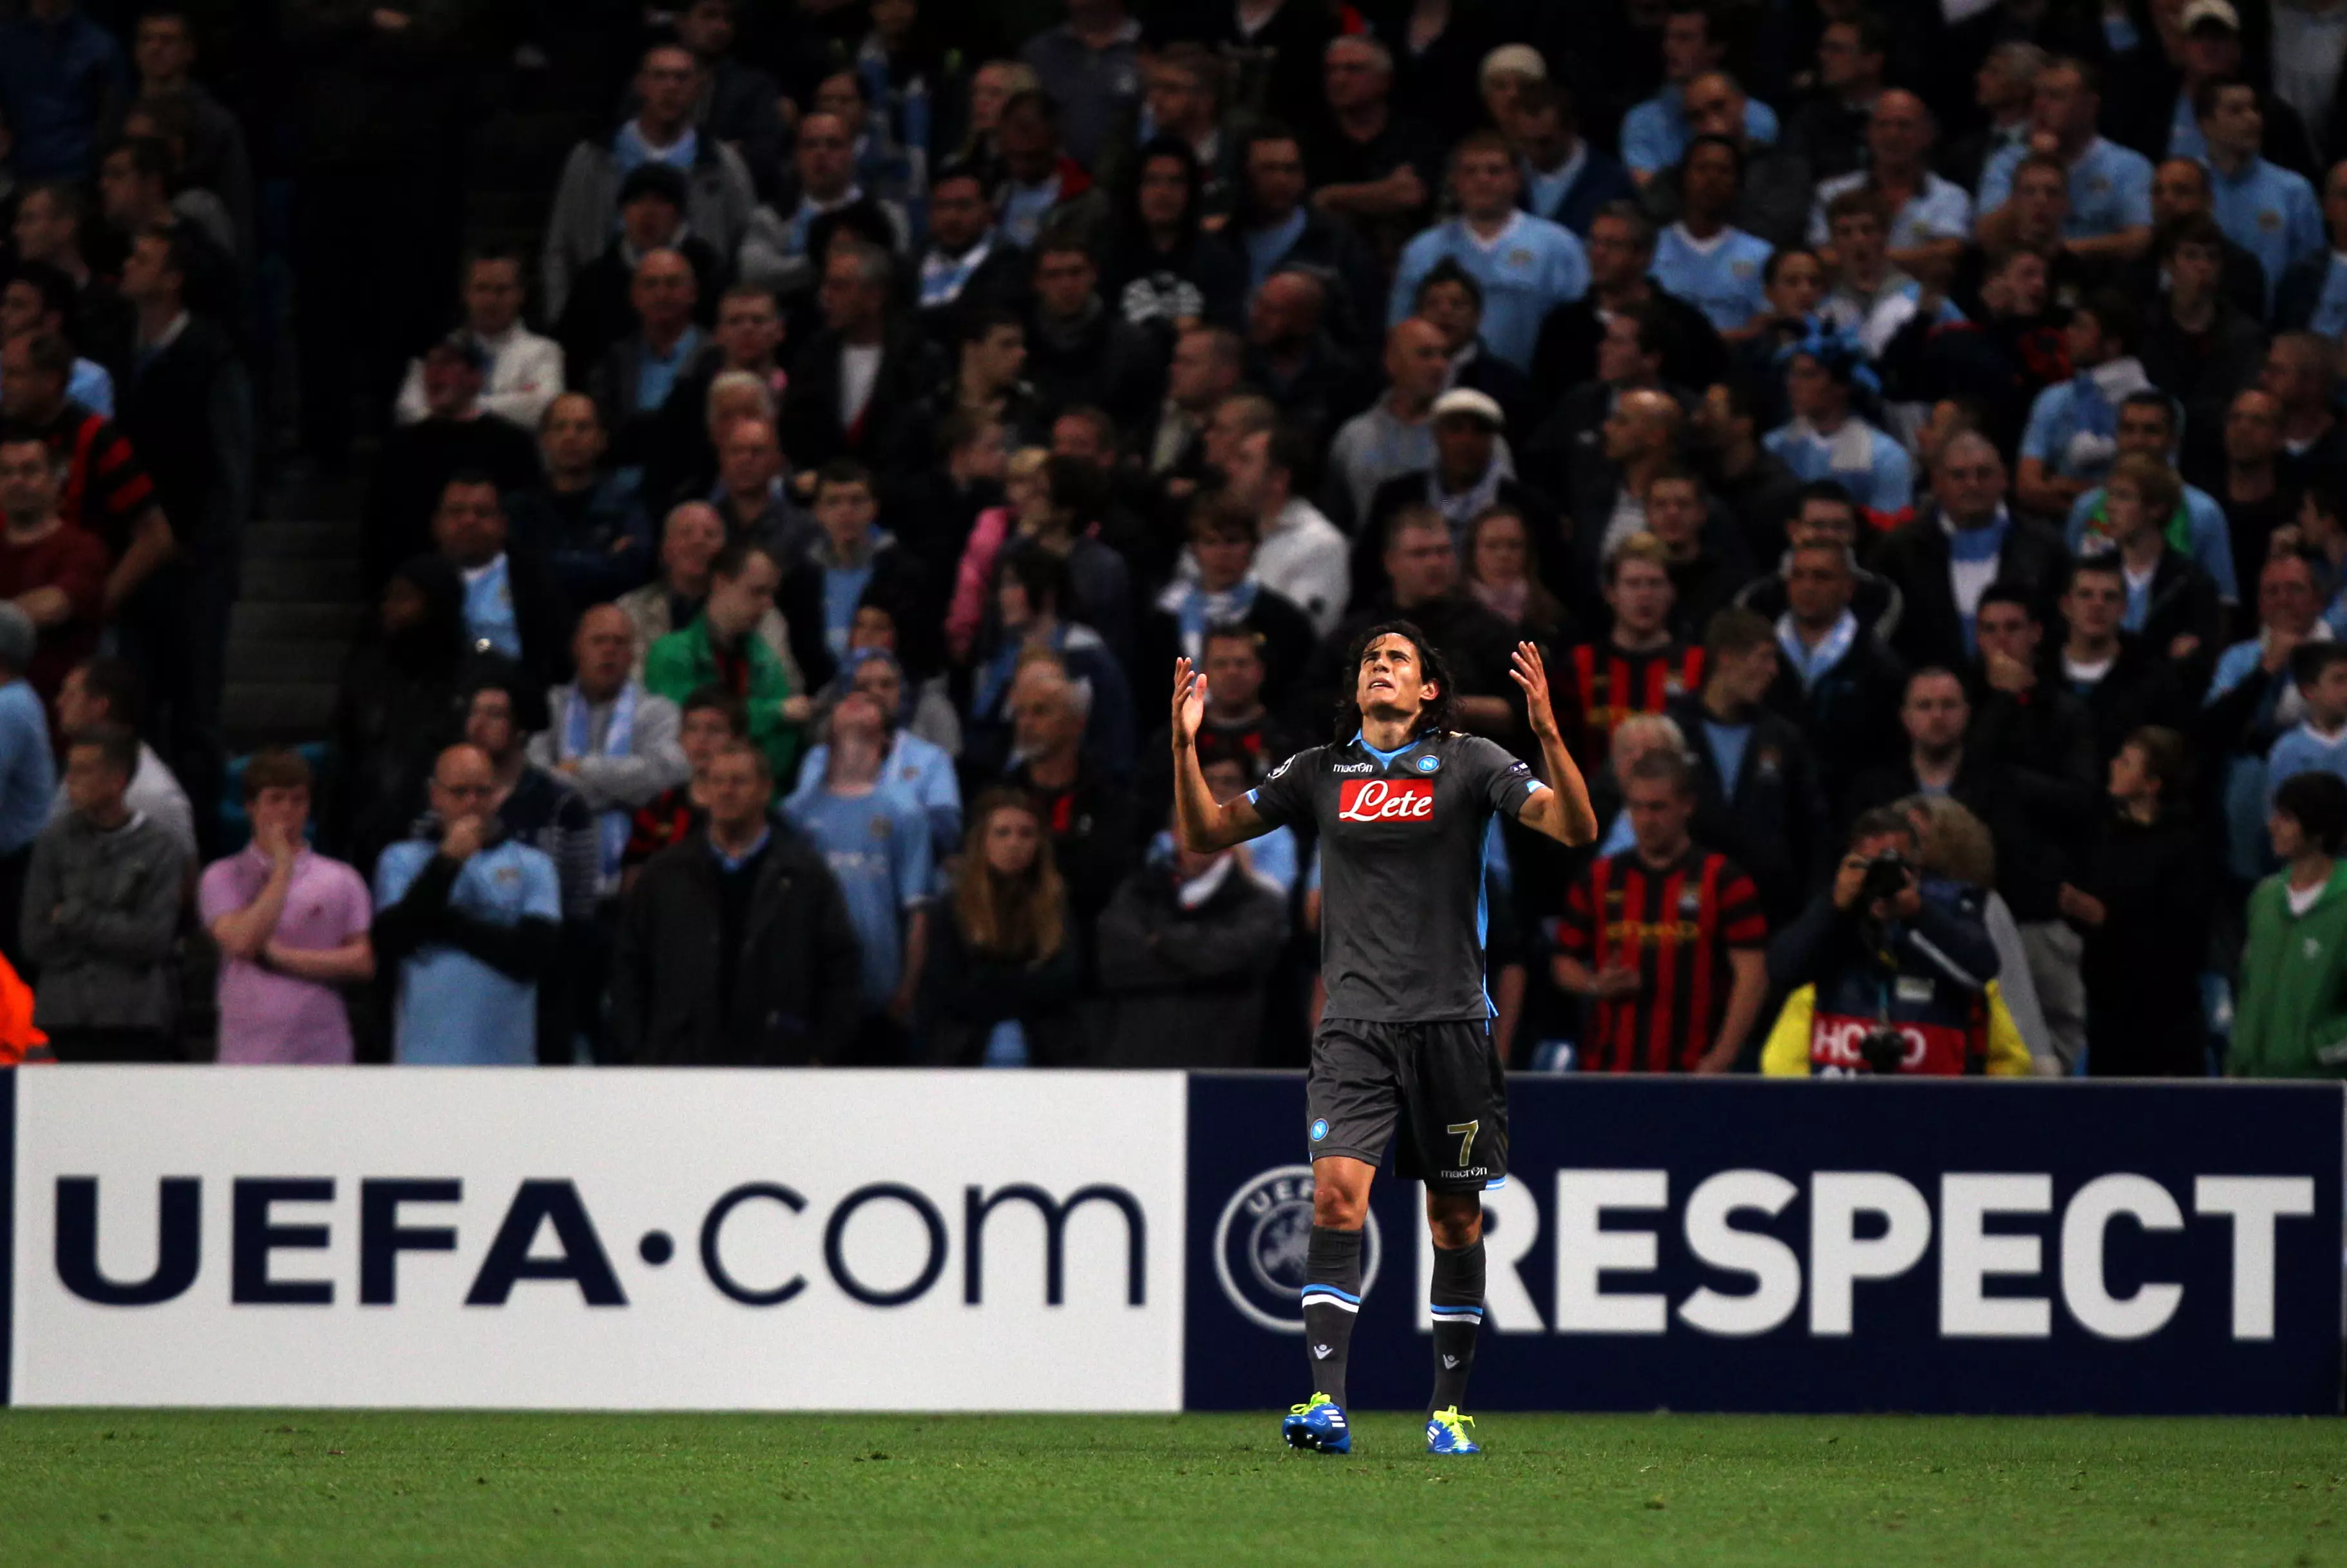 Cavani celebrates after scoring against City for Napoli. Image: PA Images